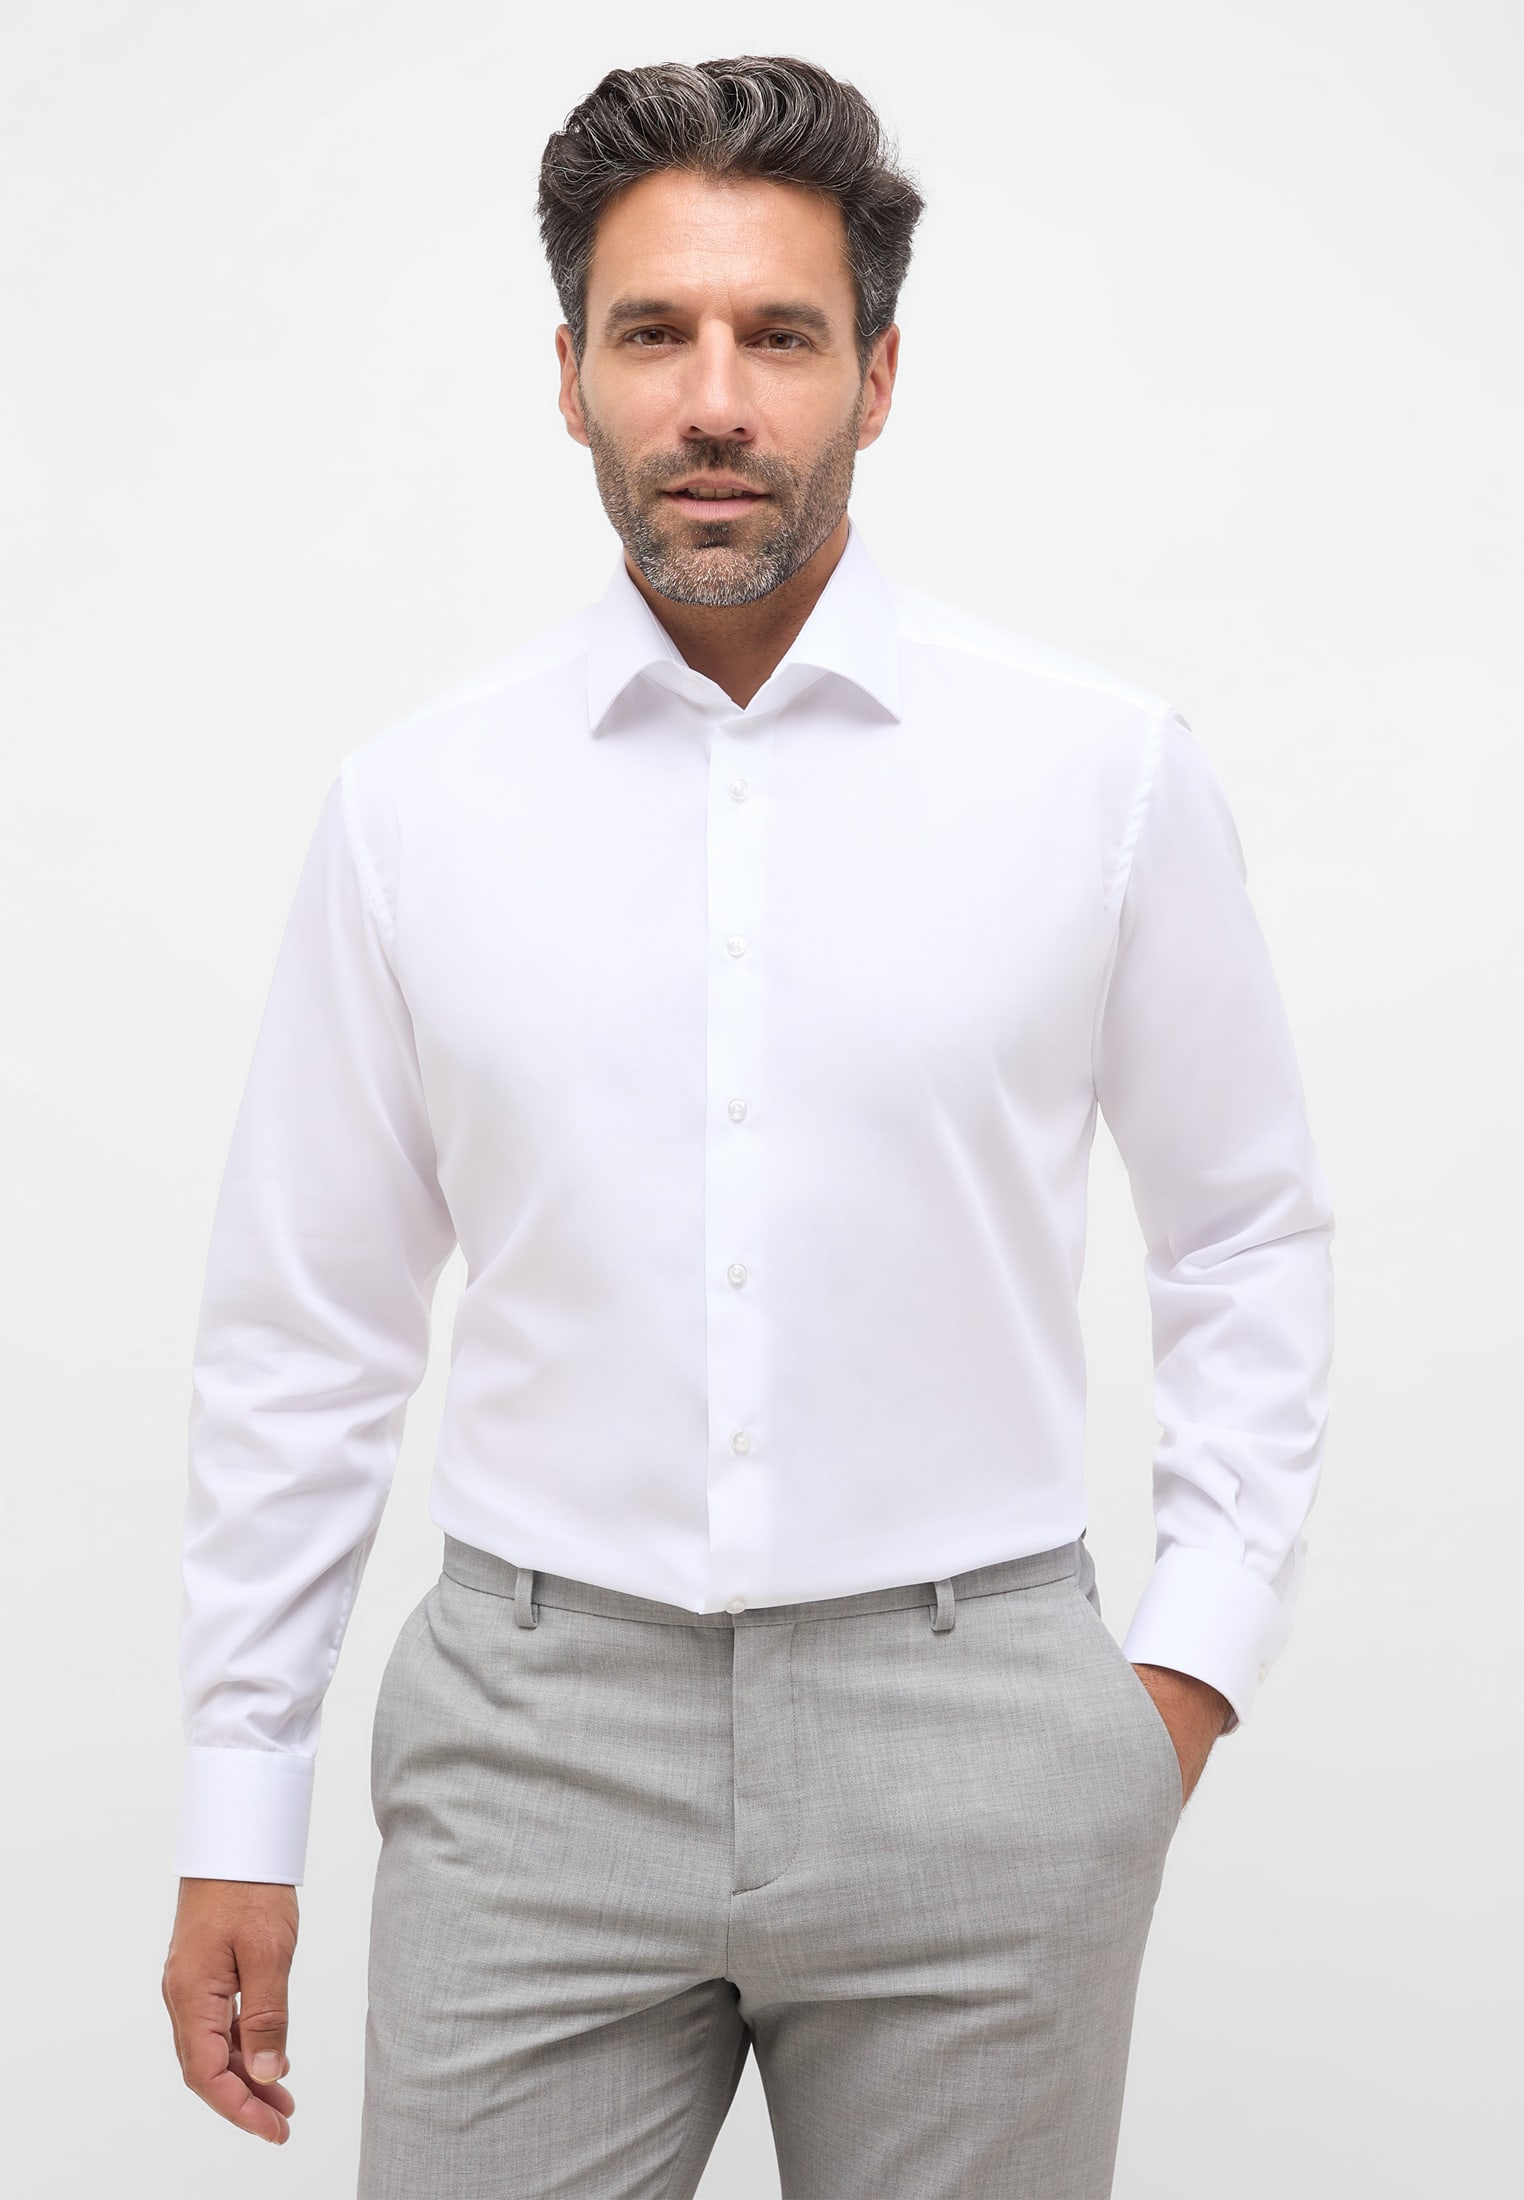 COMFORT FIT Original in | weiß | 40 1SH12605-00-01-40-1/1 | unifarben | Langarm weiß Shirt